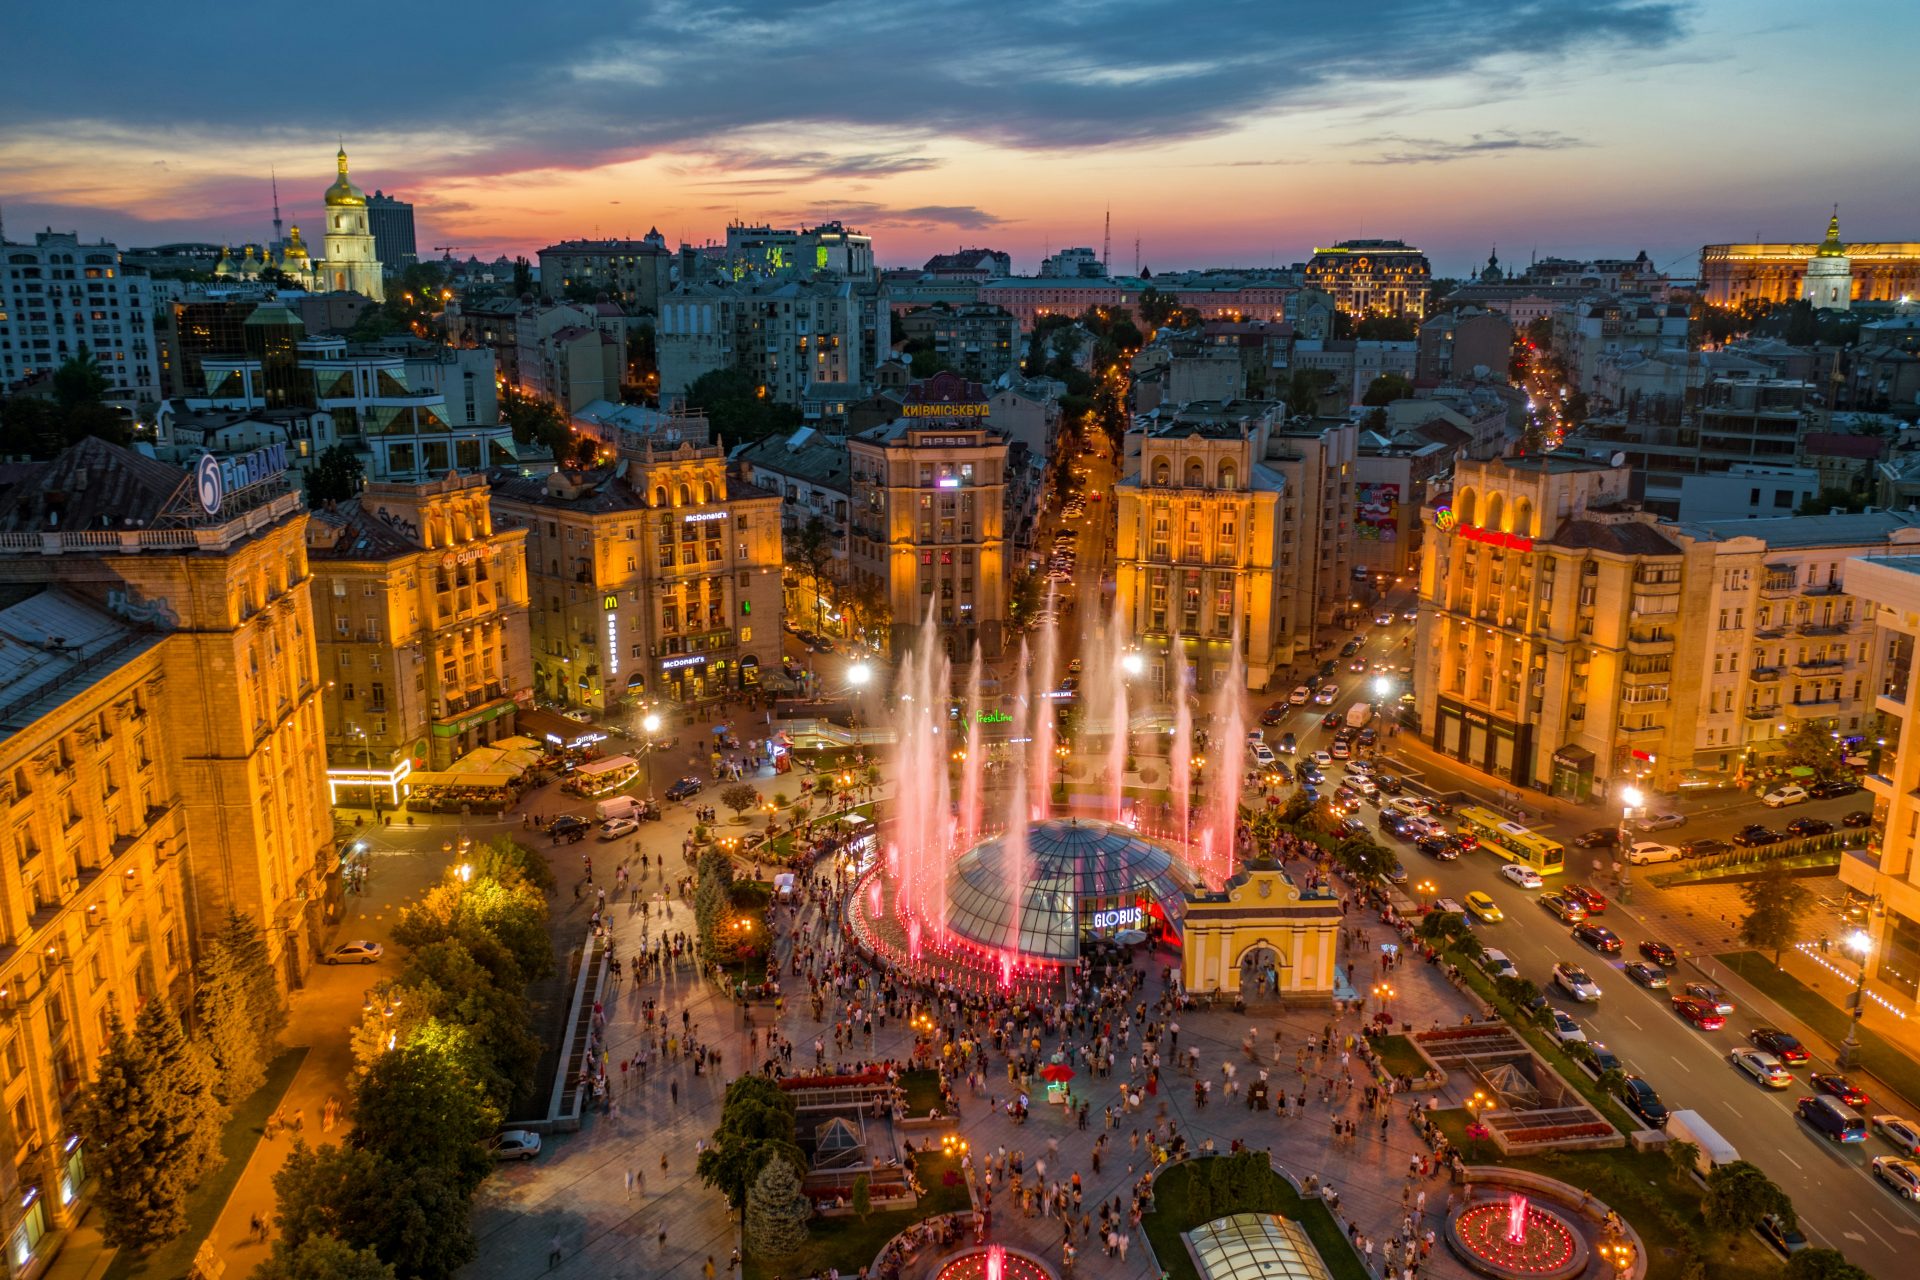 The Free City of Kyiv